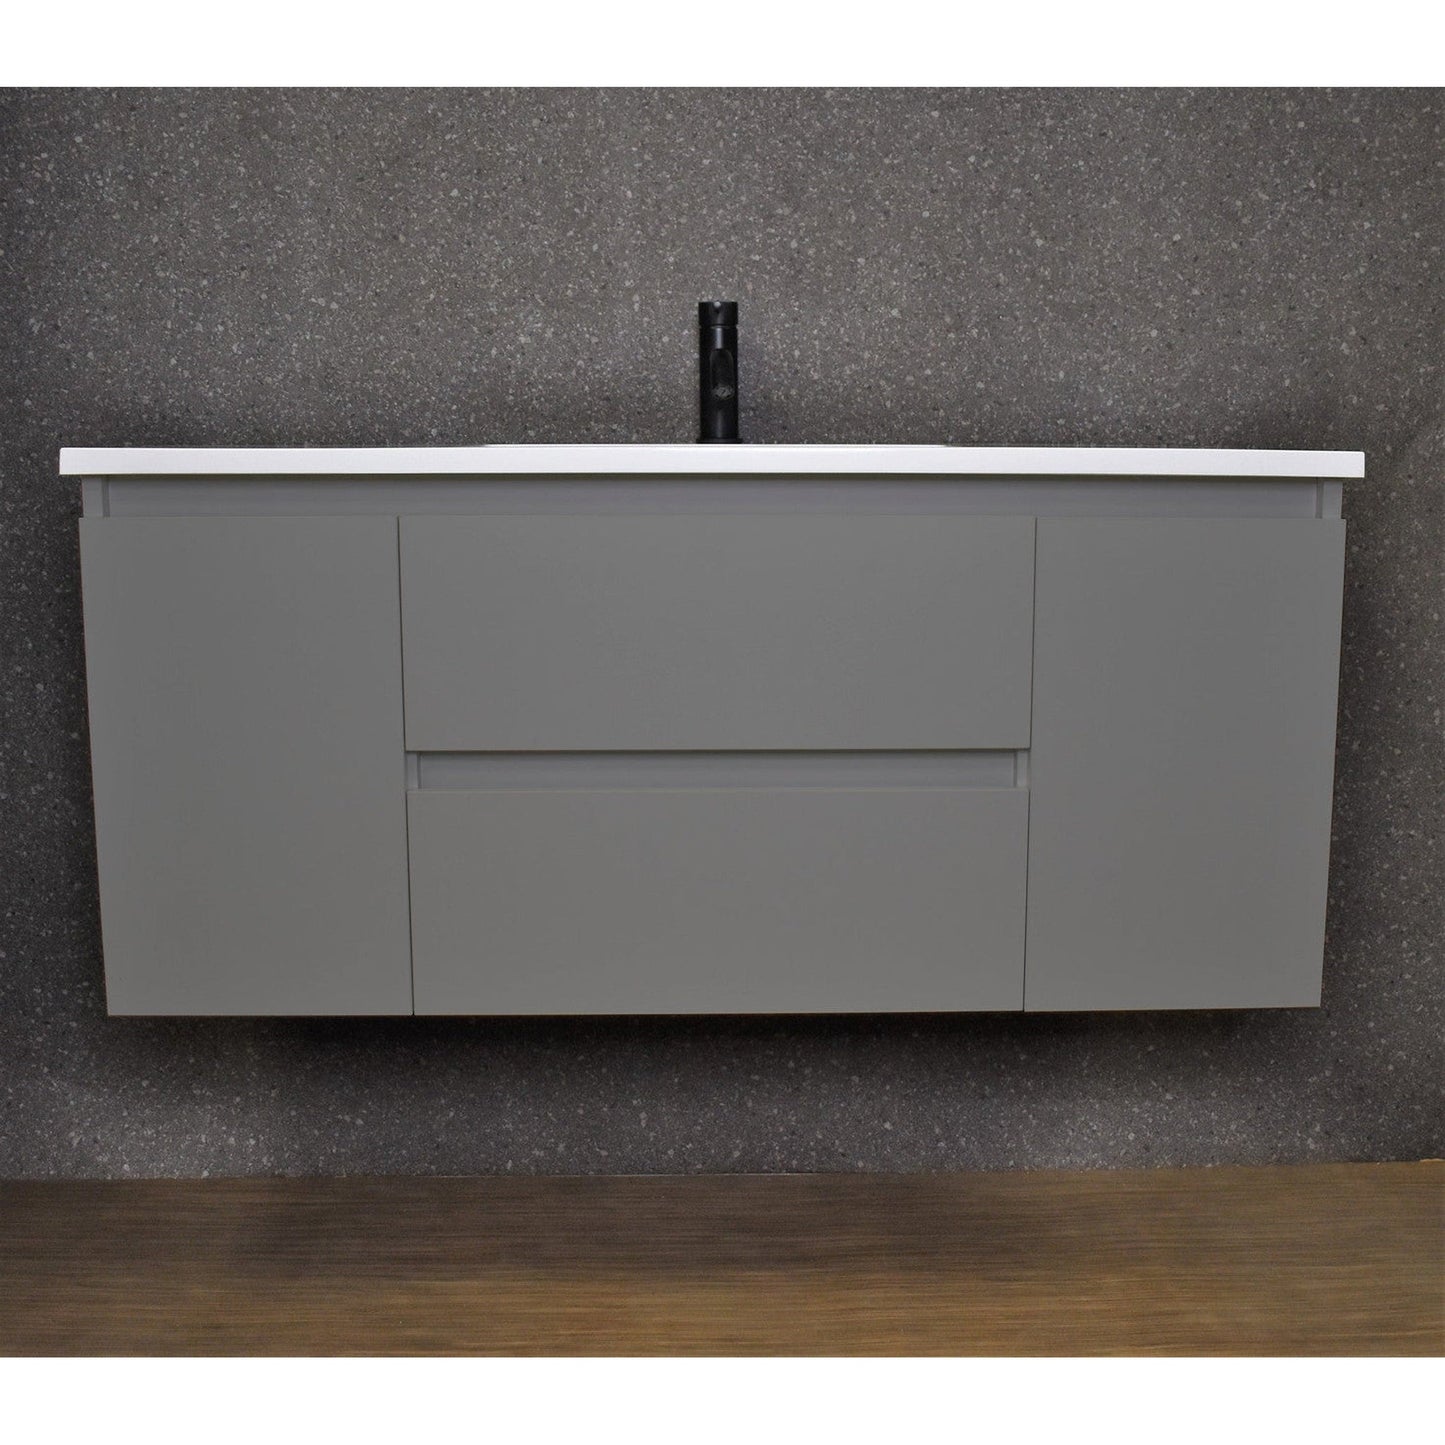 Volpa USA Salt 48" x 20" Gray Wall-Mounted Floating Bathroom Vanity With Drawers, Acrylic Top and Integrated Acrylic Sink